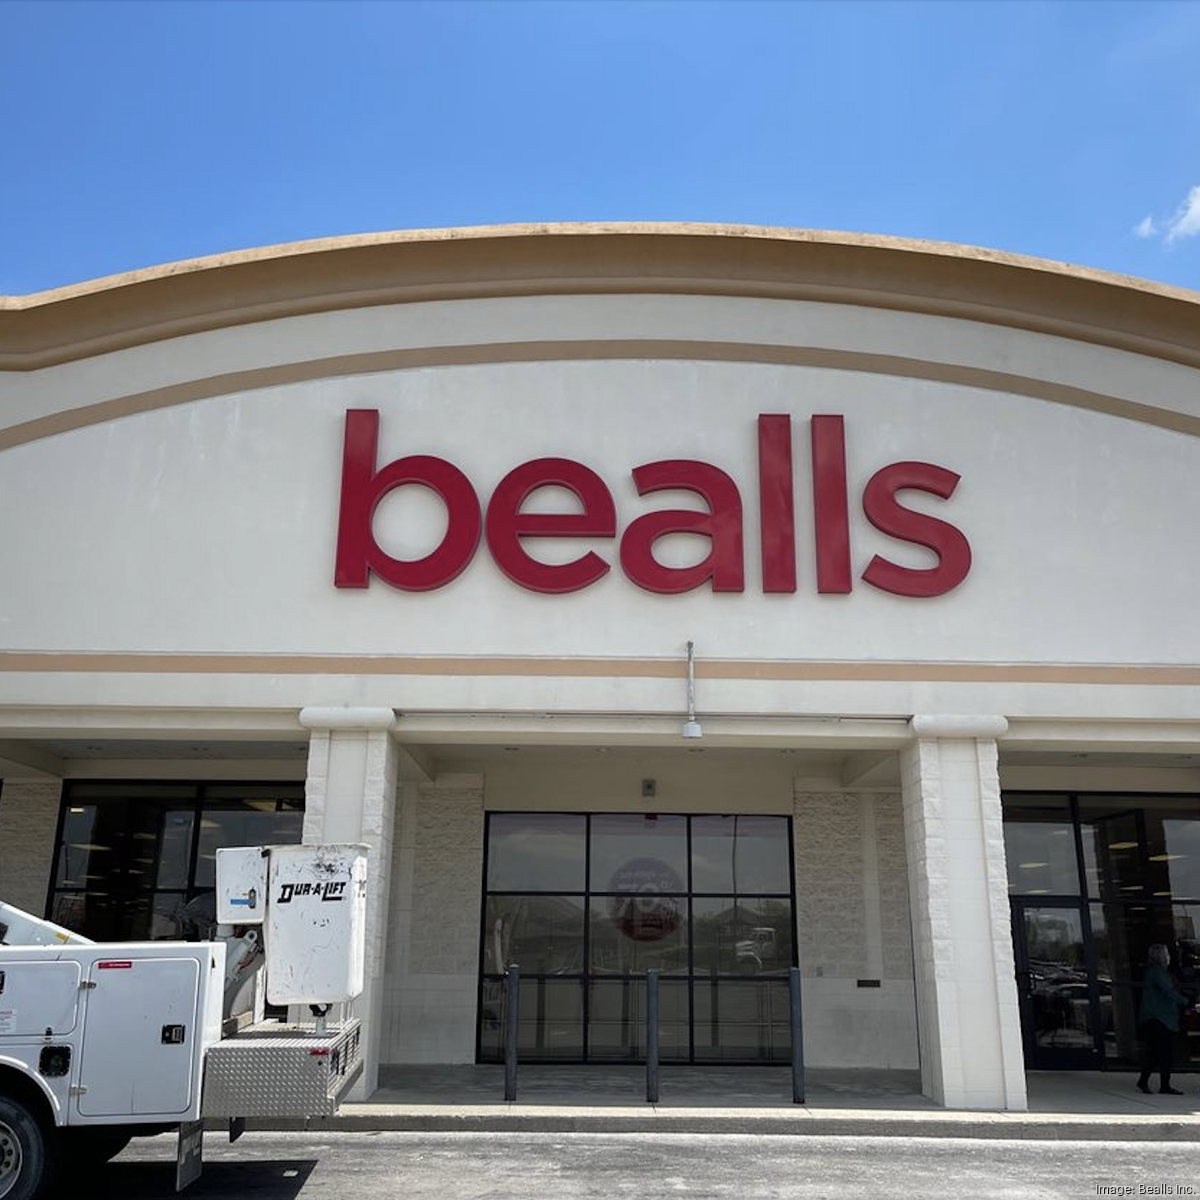 Burkes Outlet Fort Stockton location rebrands as 'bealls